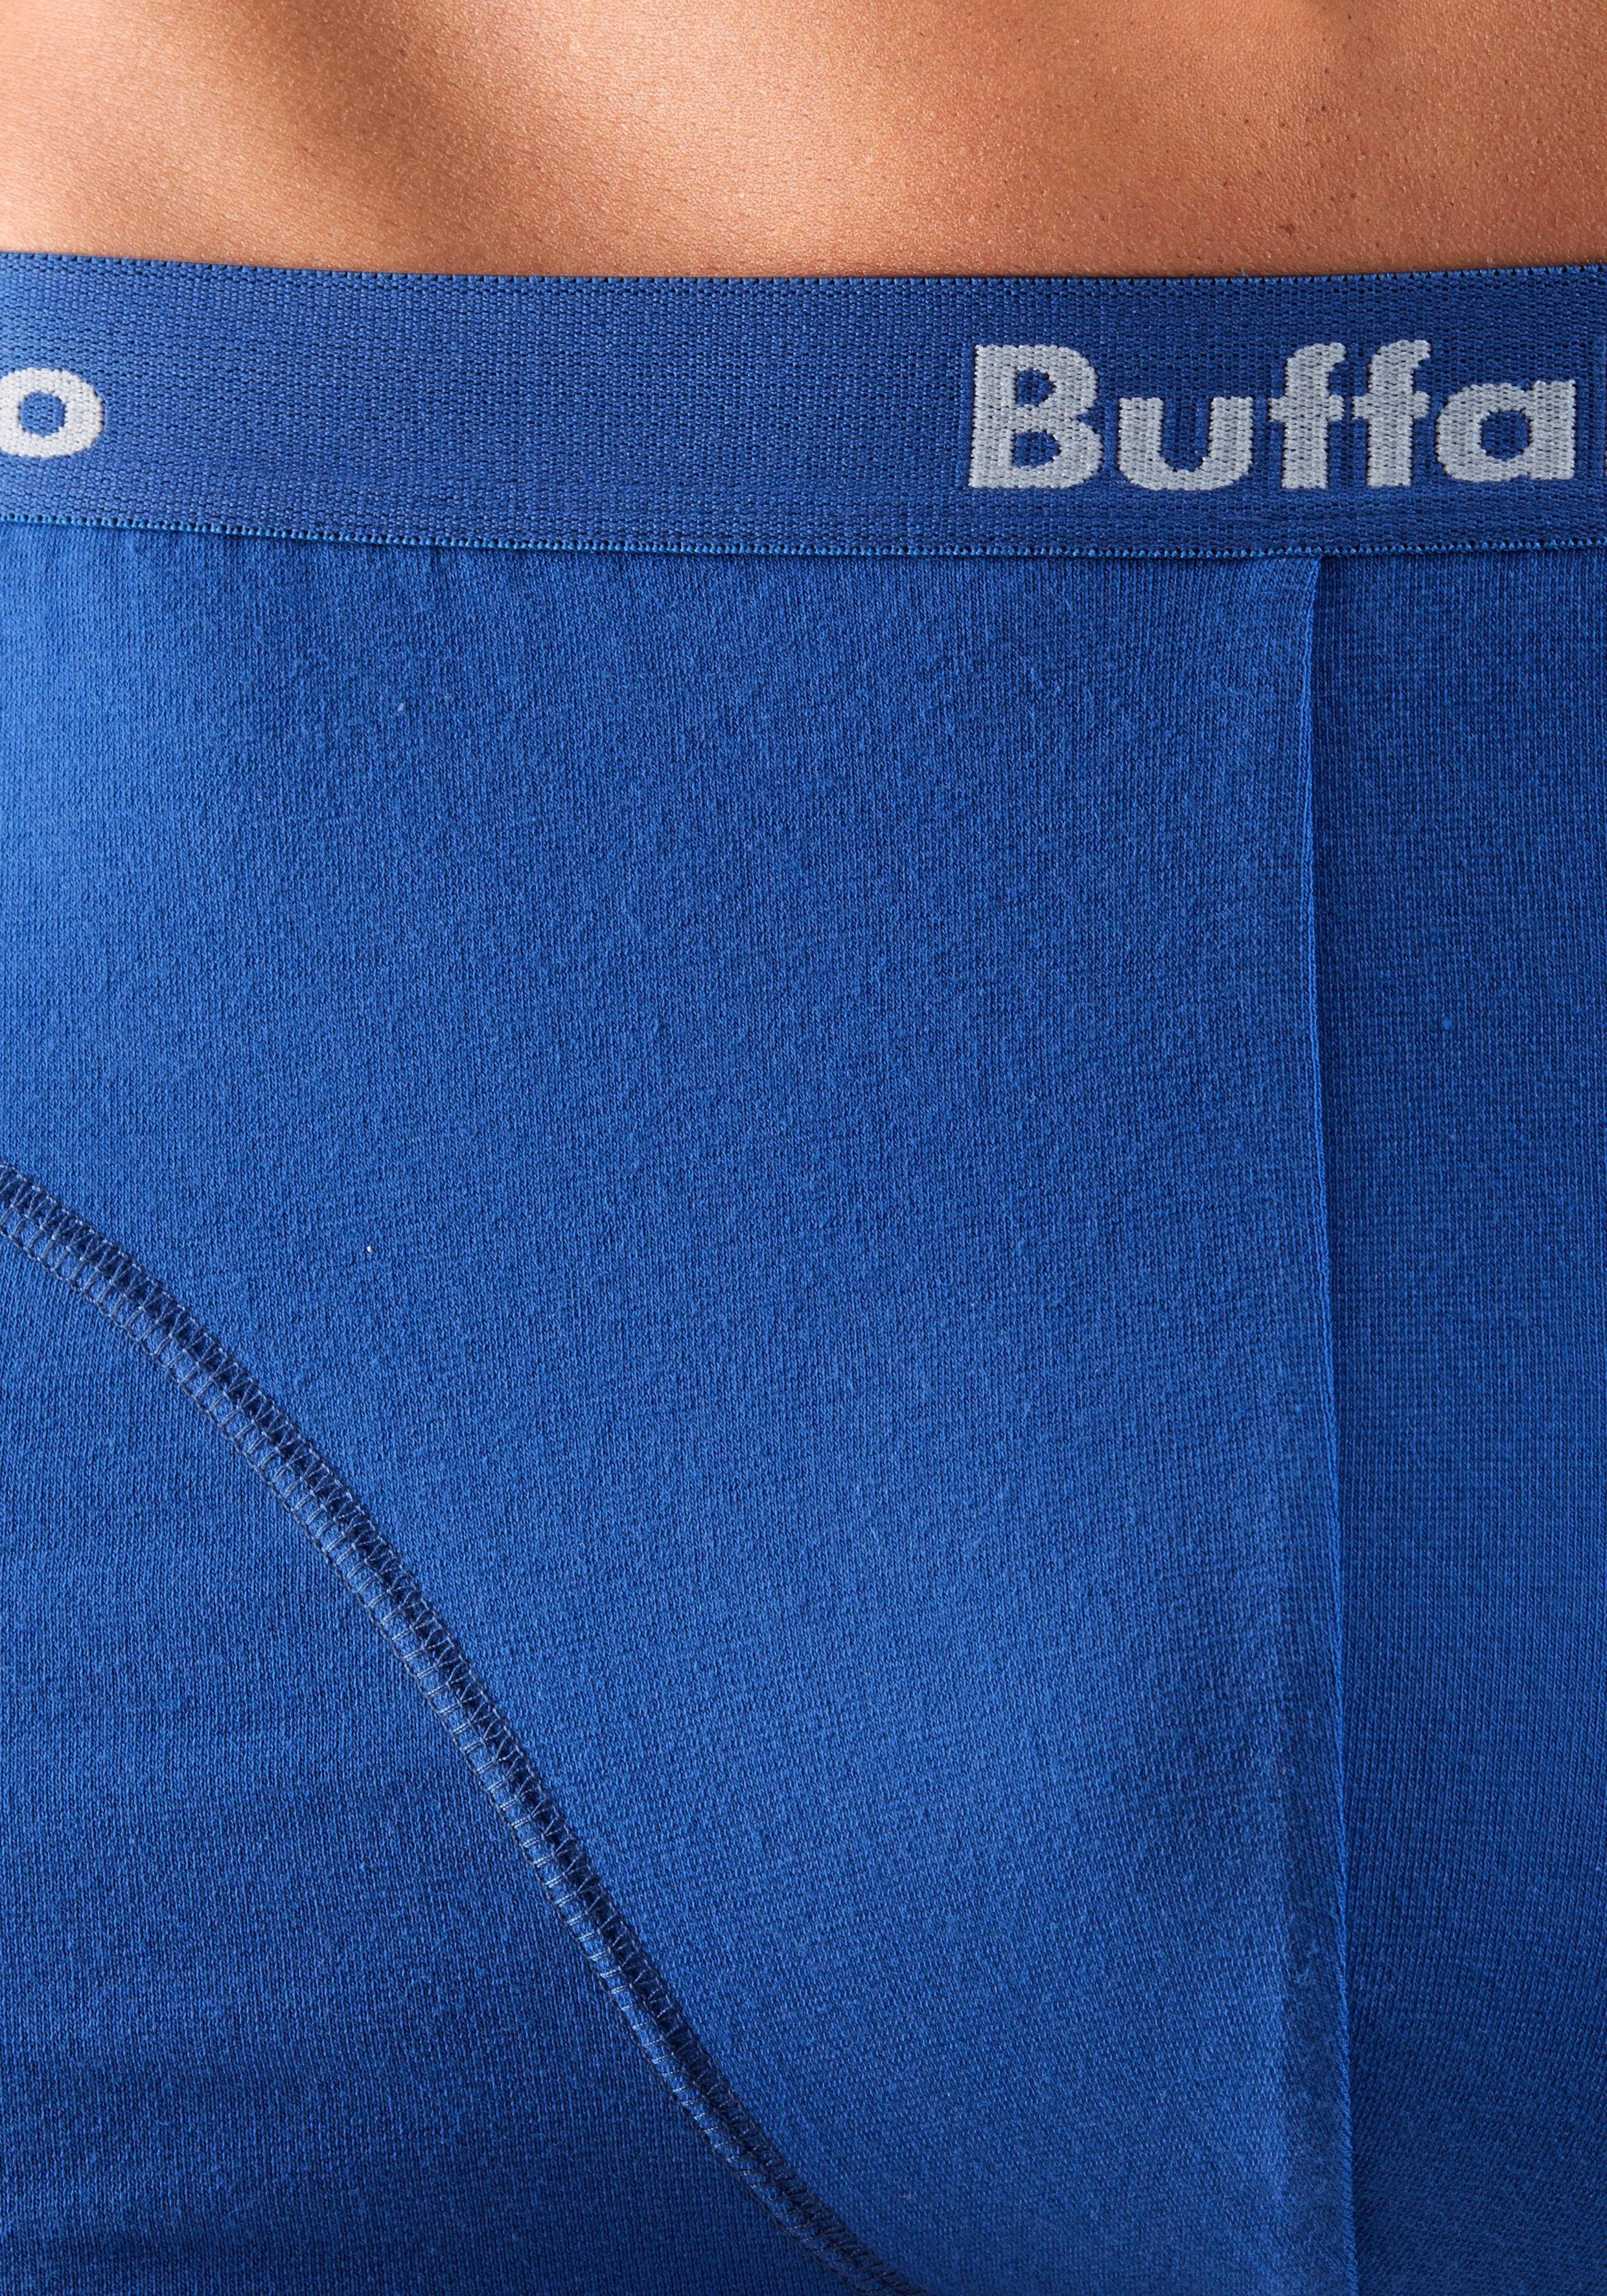 Buffalo Boxer (Packung, 3-St) anthrazit Overlock-Nähten royalblau, rot, mit vorn